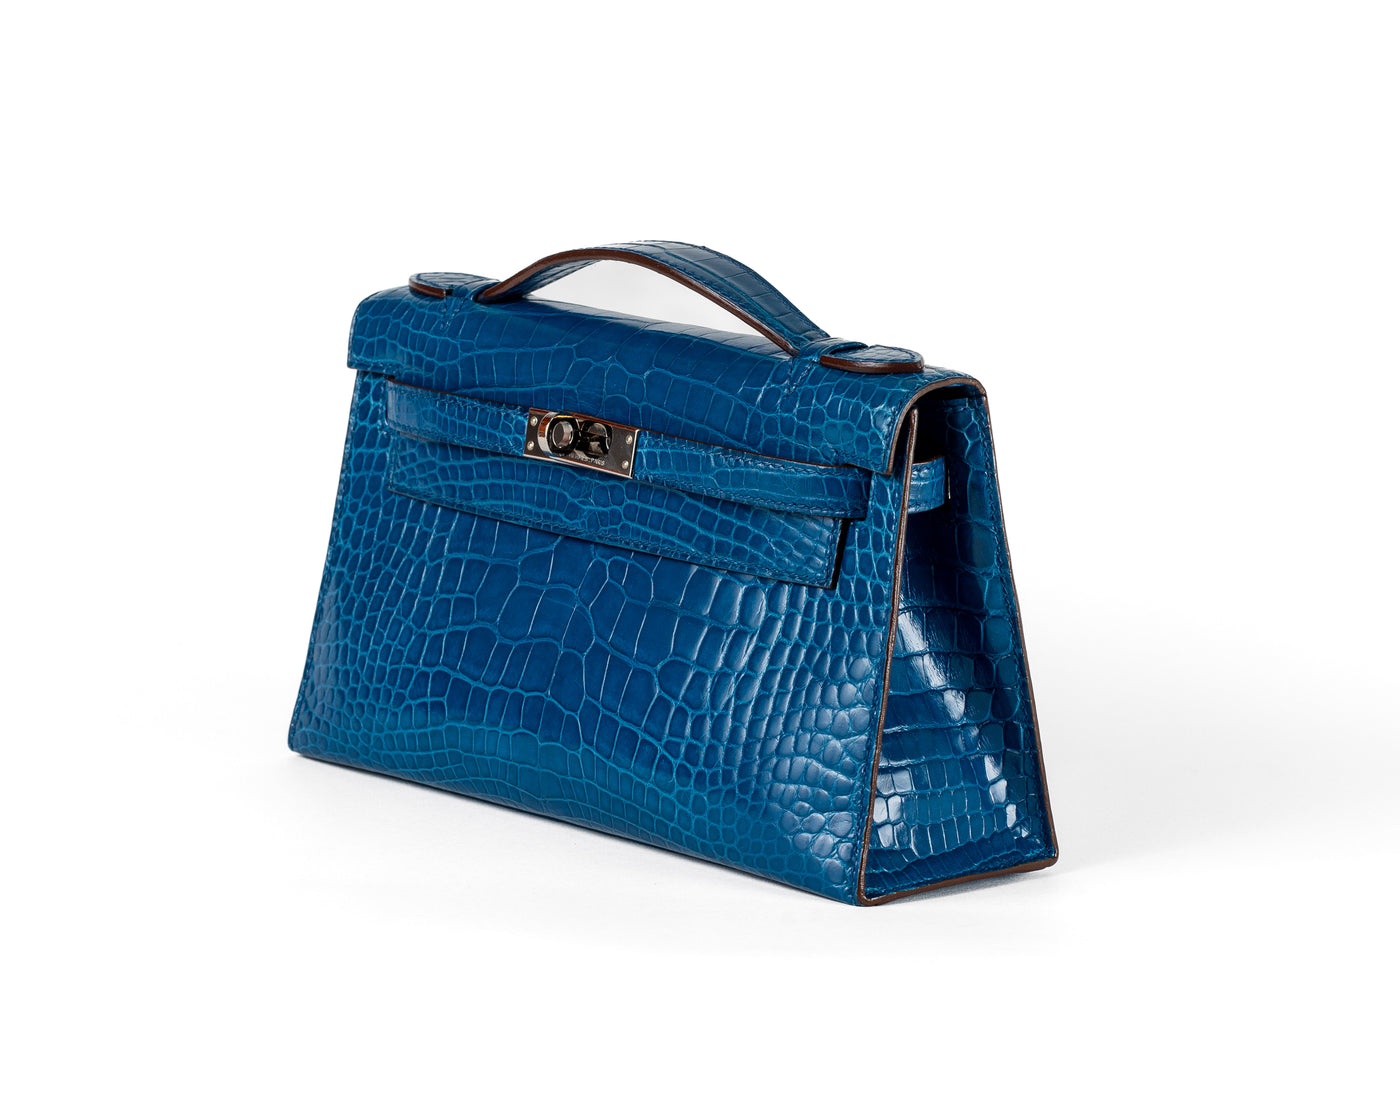 Indulge in ultimate luxury with the Hermès Blue Porosus Croc Kelly Pouchette, finished with sleek palladium hardware